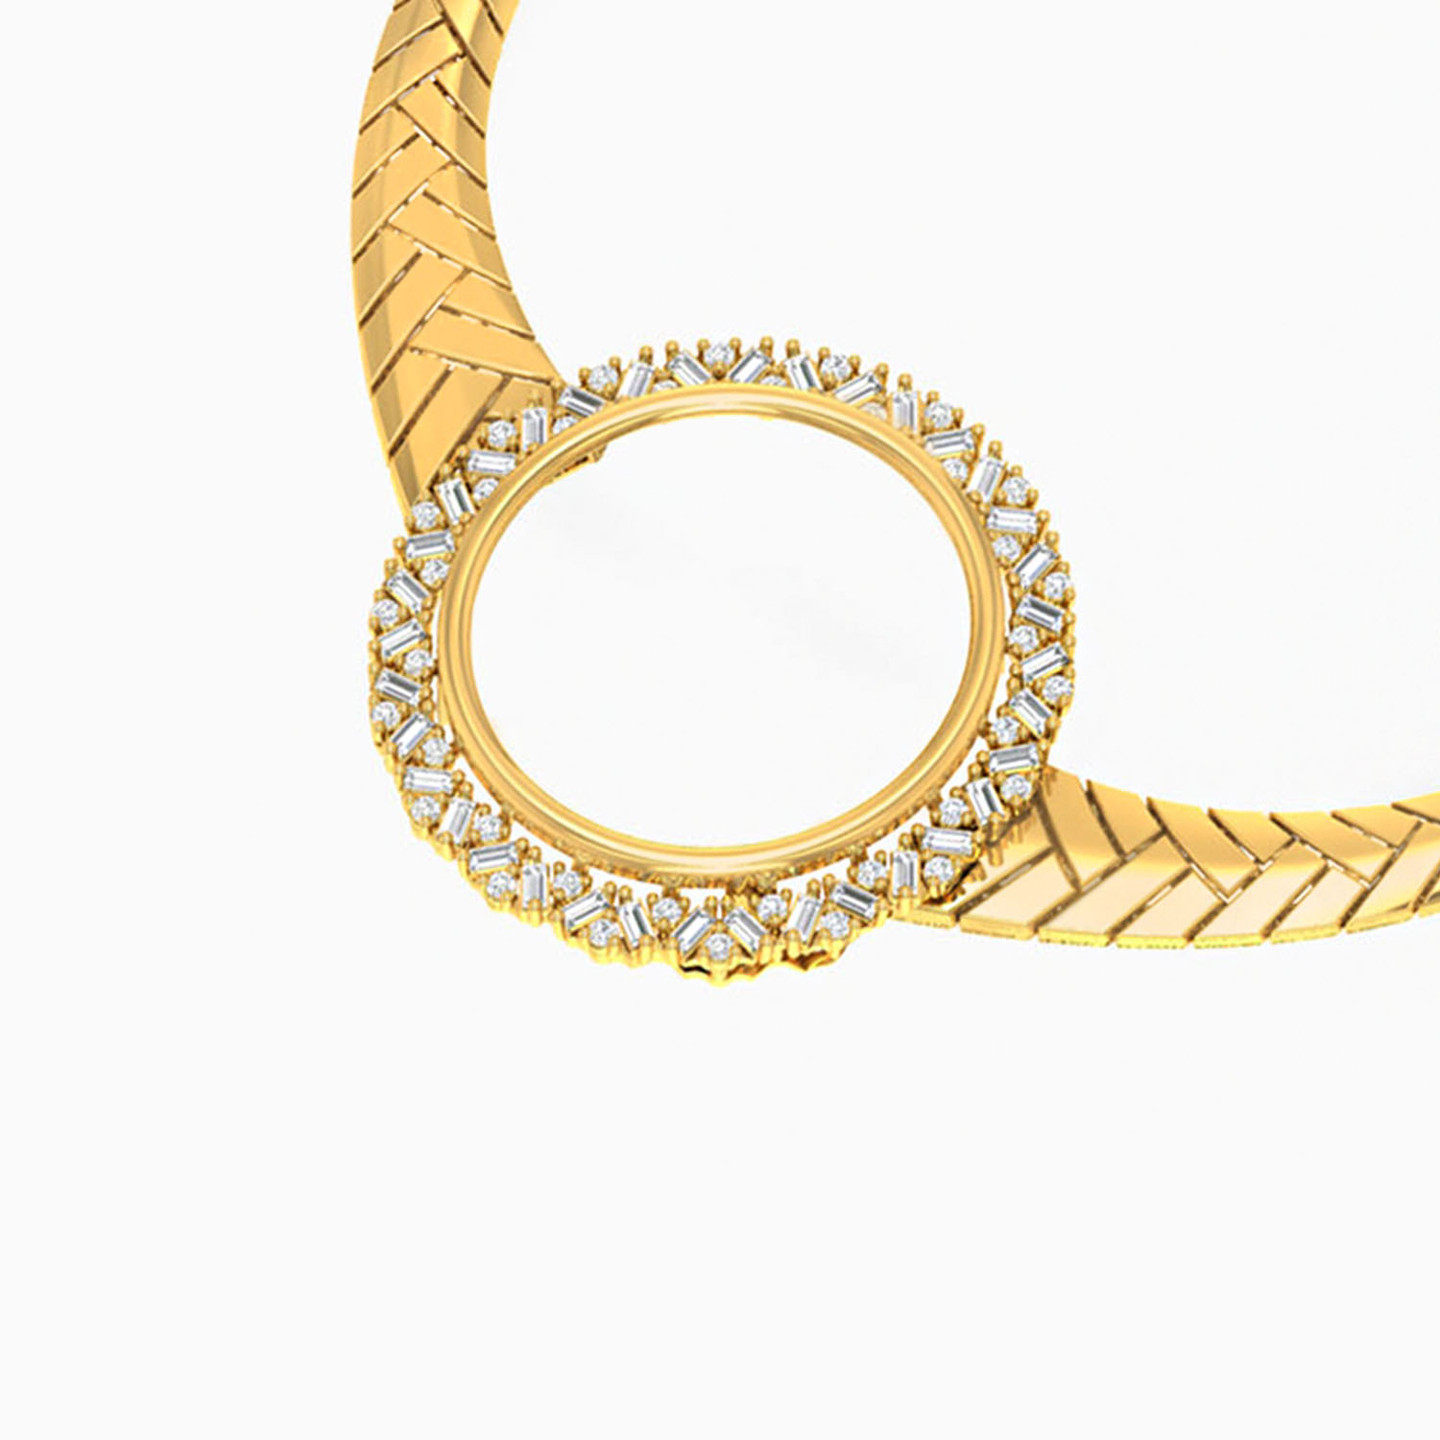 18K Gold Cubic Zirconia Chain Bracelet - 3